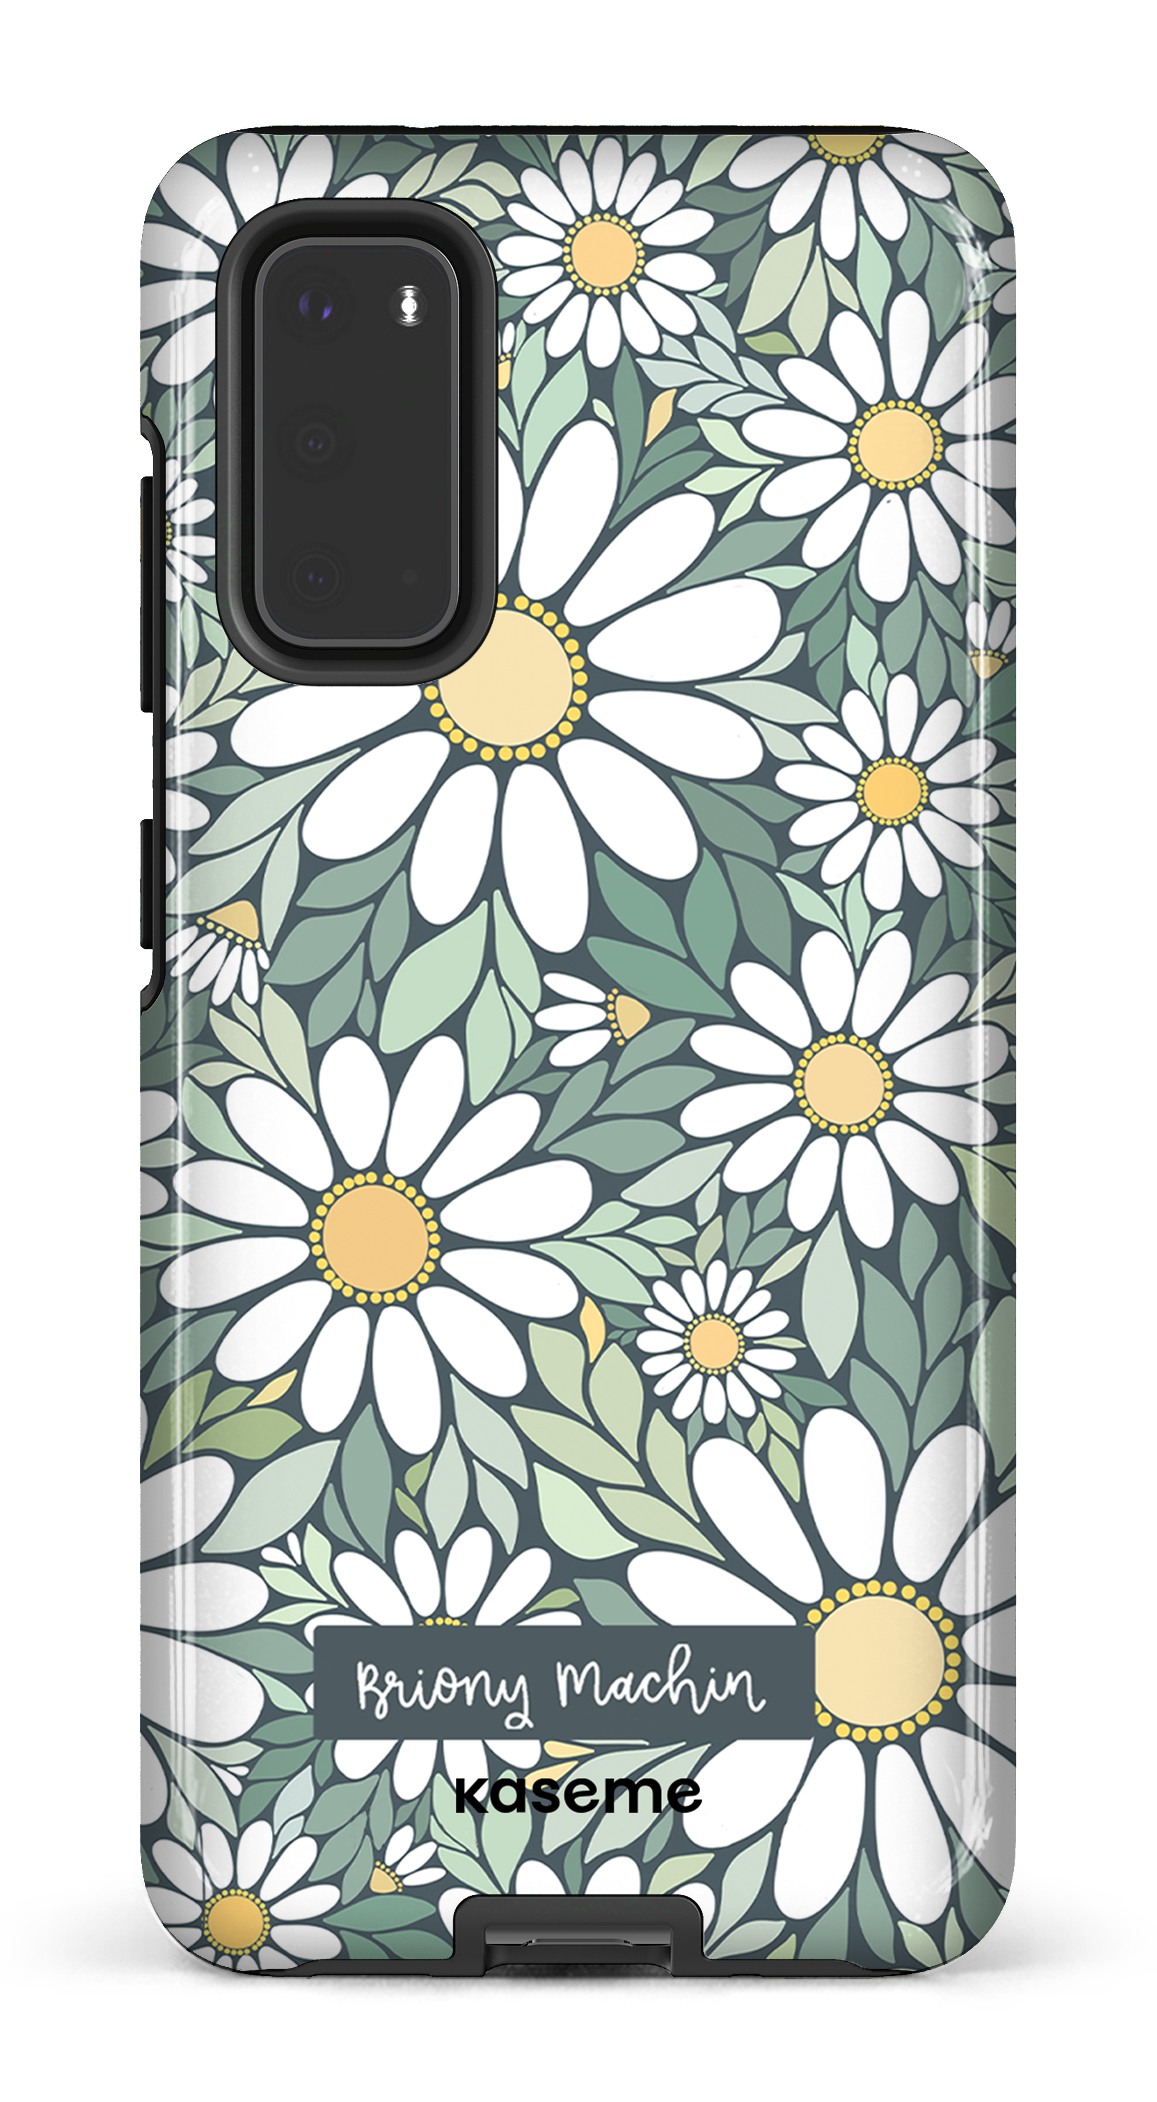 Daisy Blooms by Briony Machin - Galaxy S20